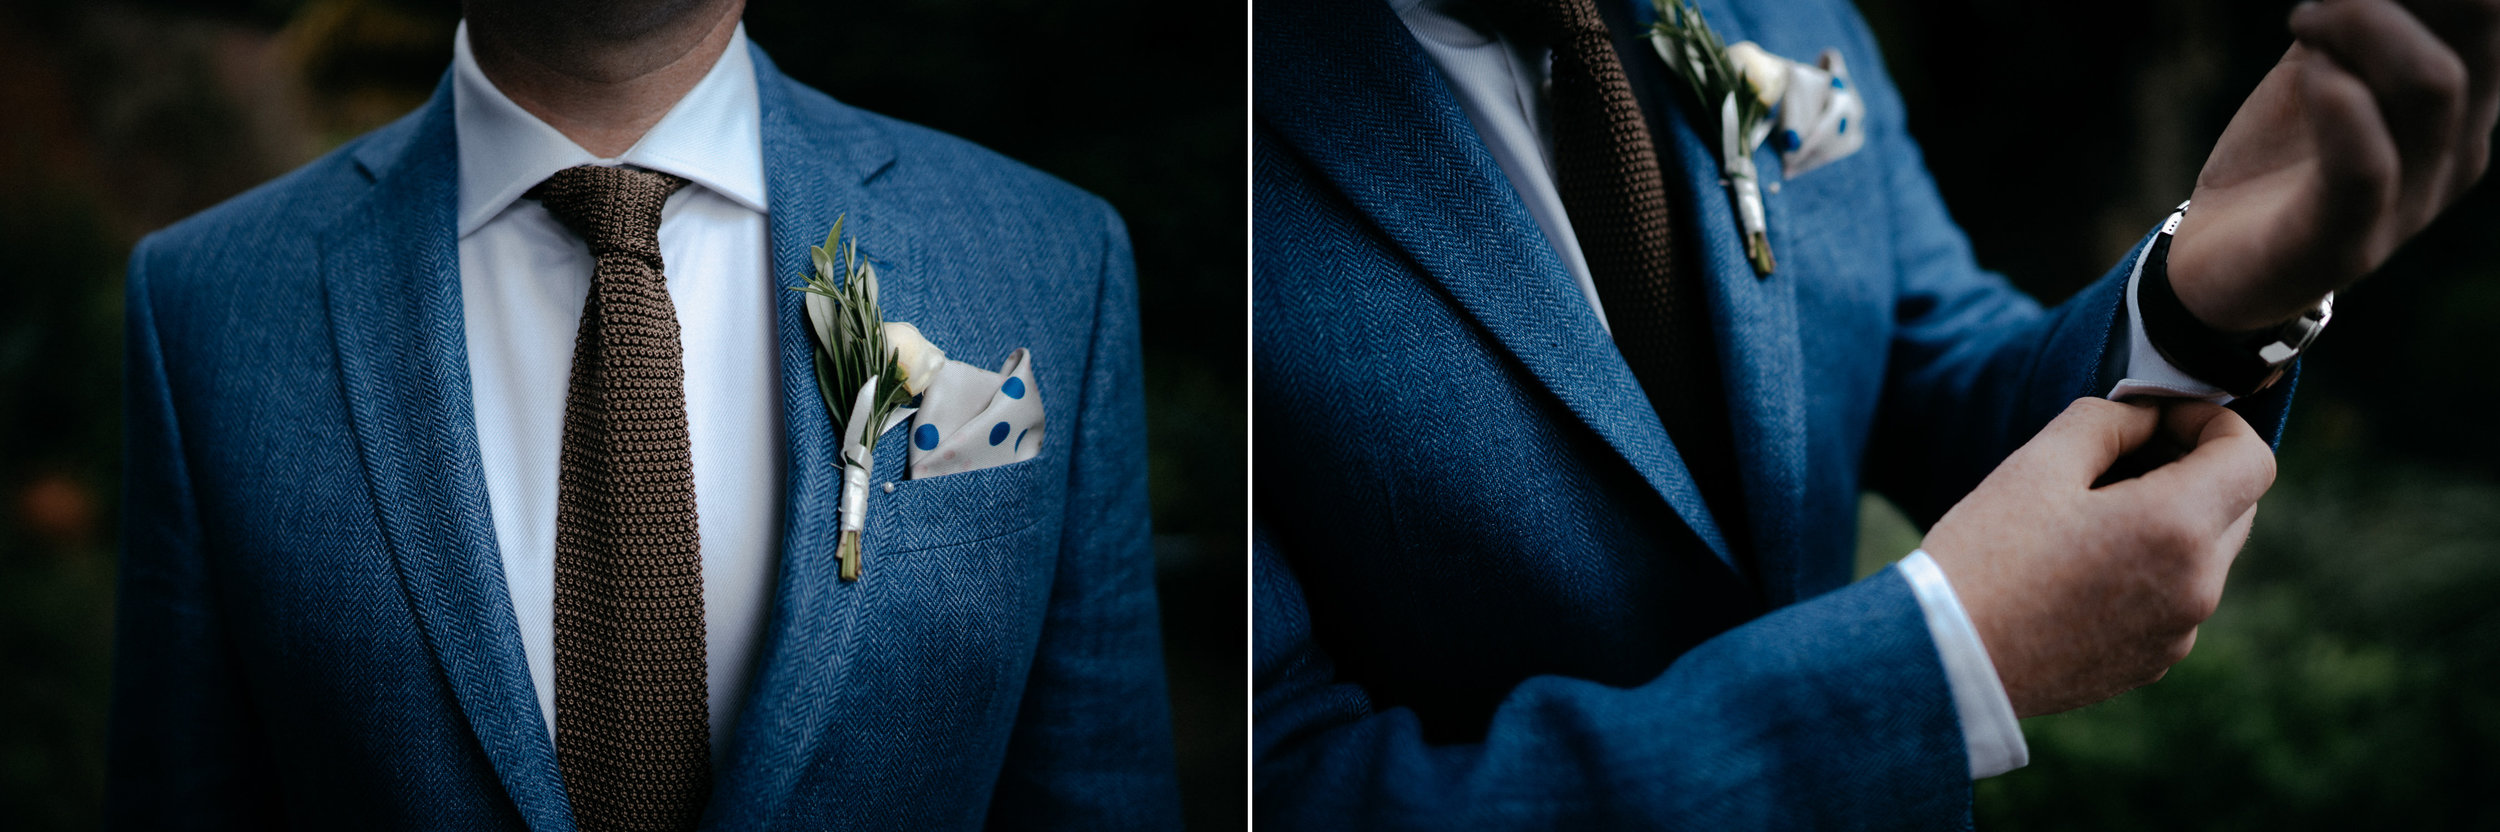 wedding photography london details groom suit